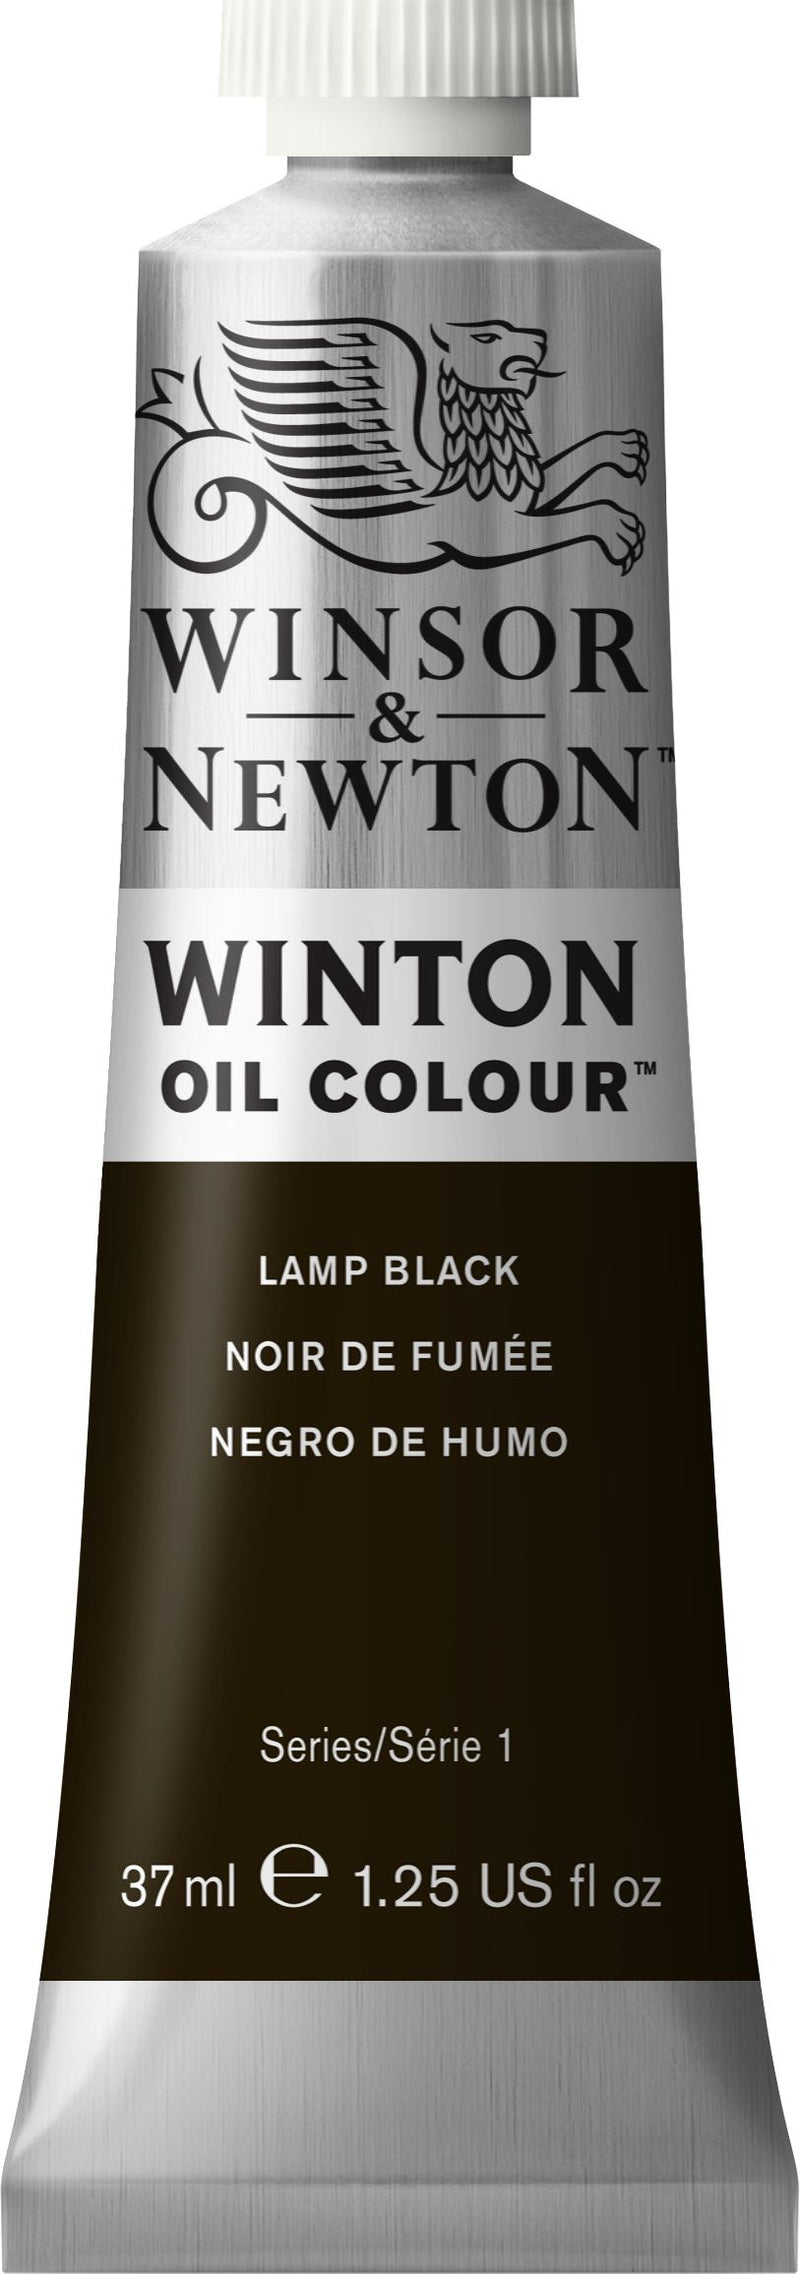 Winton Oil Colour Lamp Black - 37ml tube